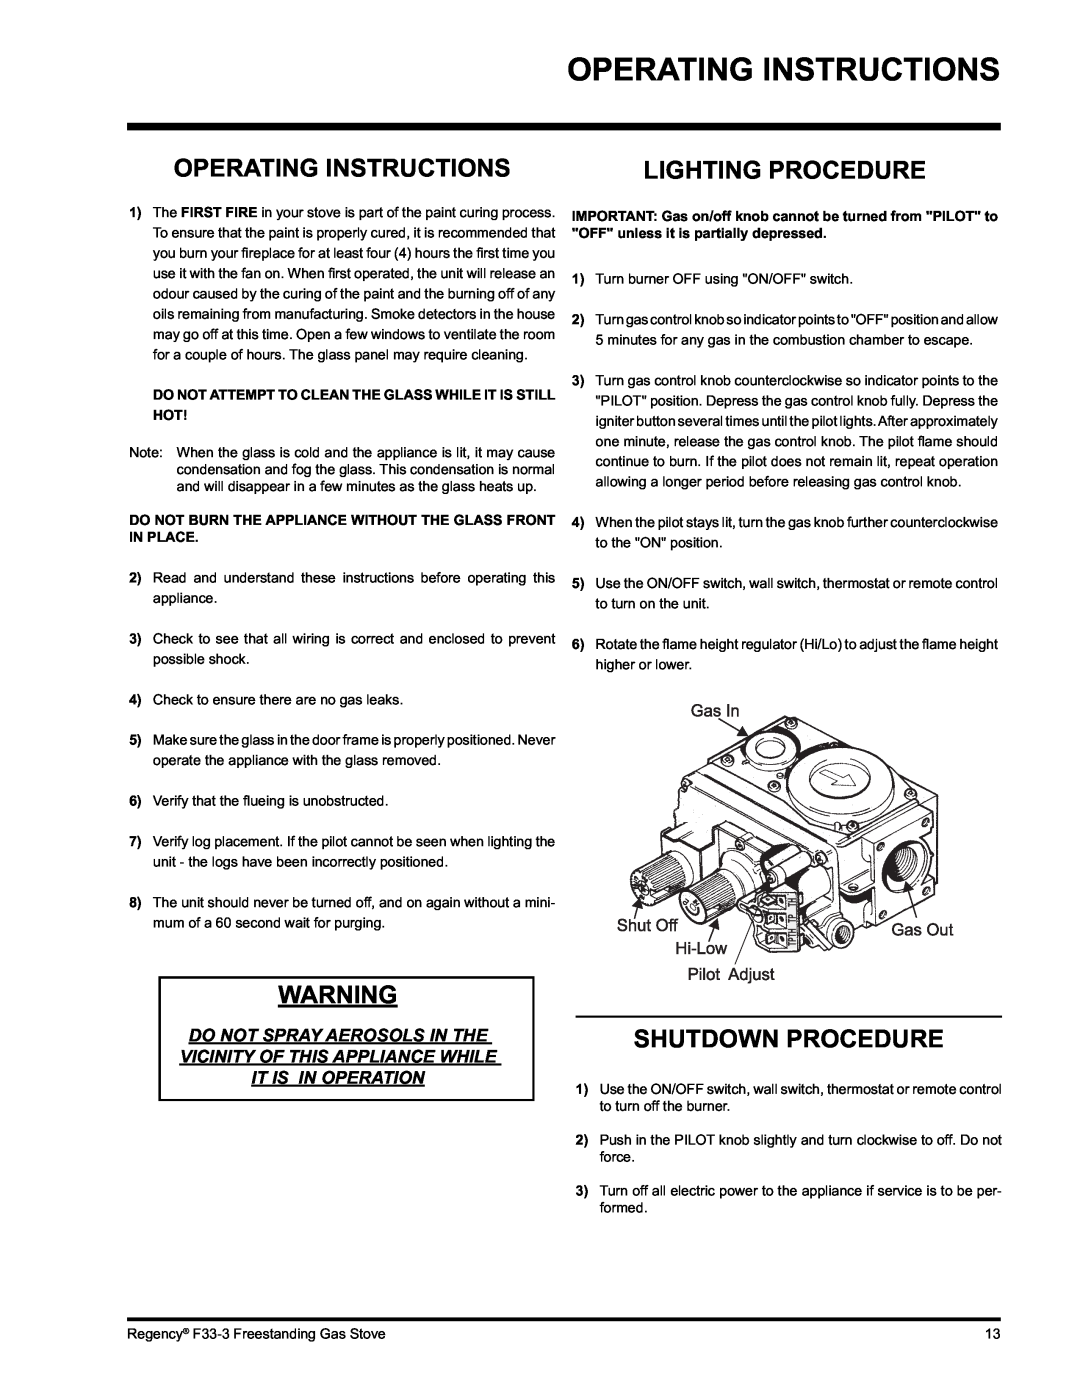 Regency Wraps F33 installation manual Operating Instructions, Shutdown Procedure, Lighting Procedure 